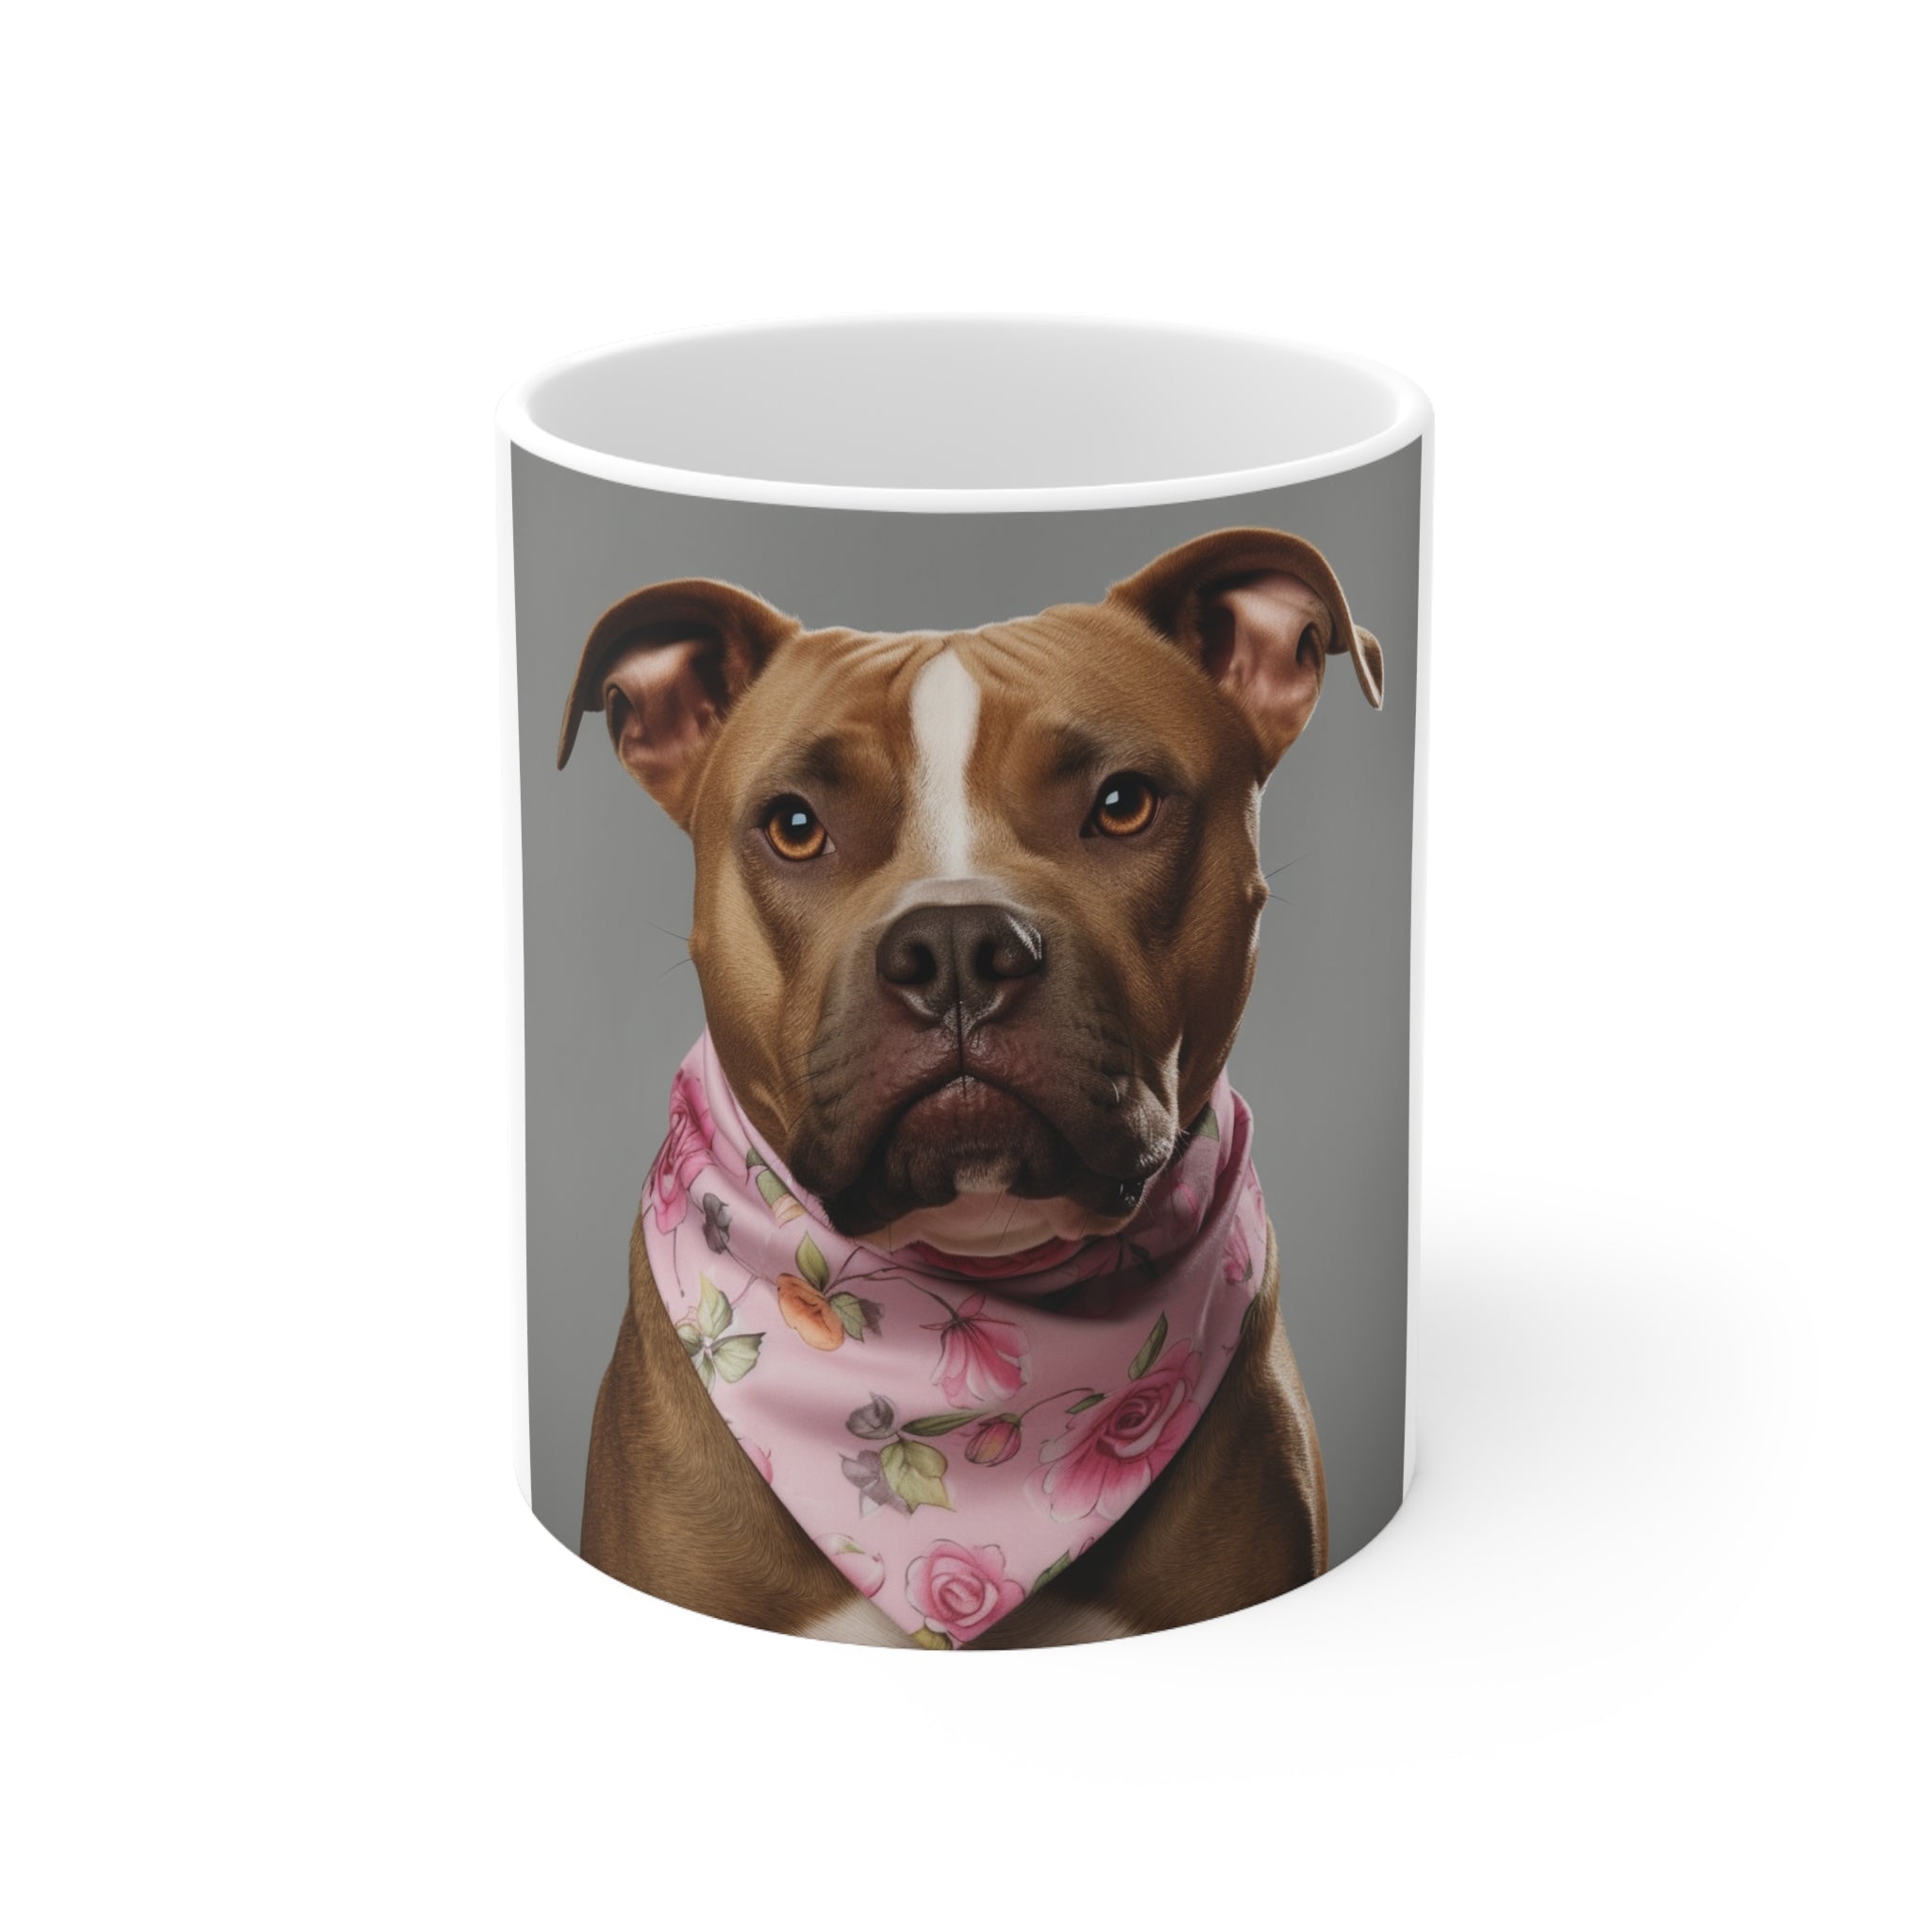 🐶 Furry Friend Dog Photo Ceramic Mug 11oz - Personalized Pet Mug for Dog Lovers | Cherish Your Canine Companion with Every Sip